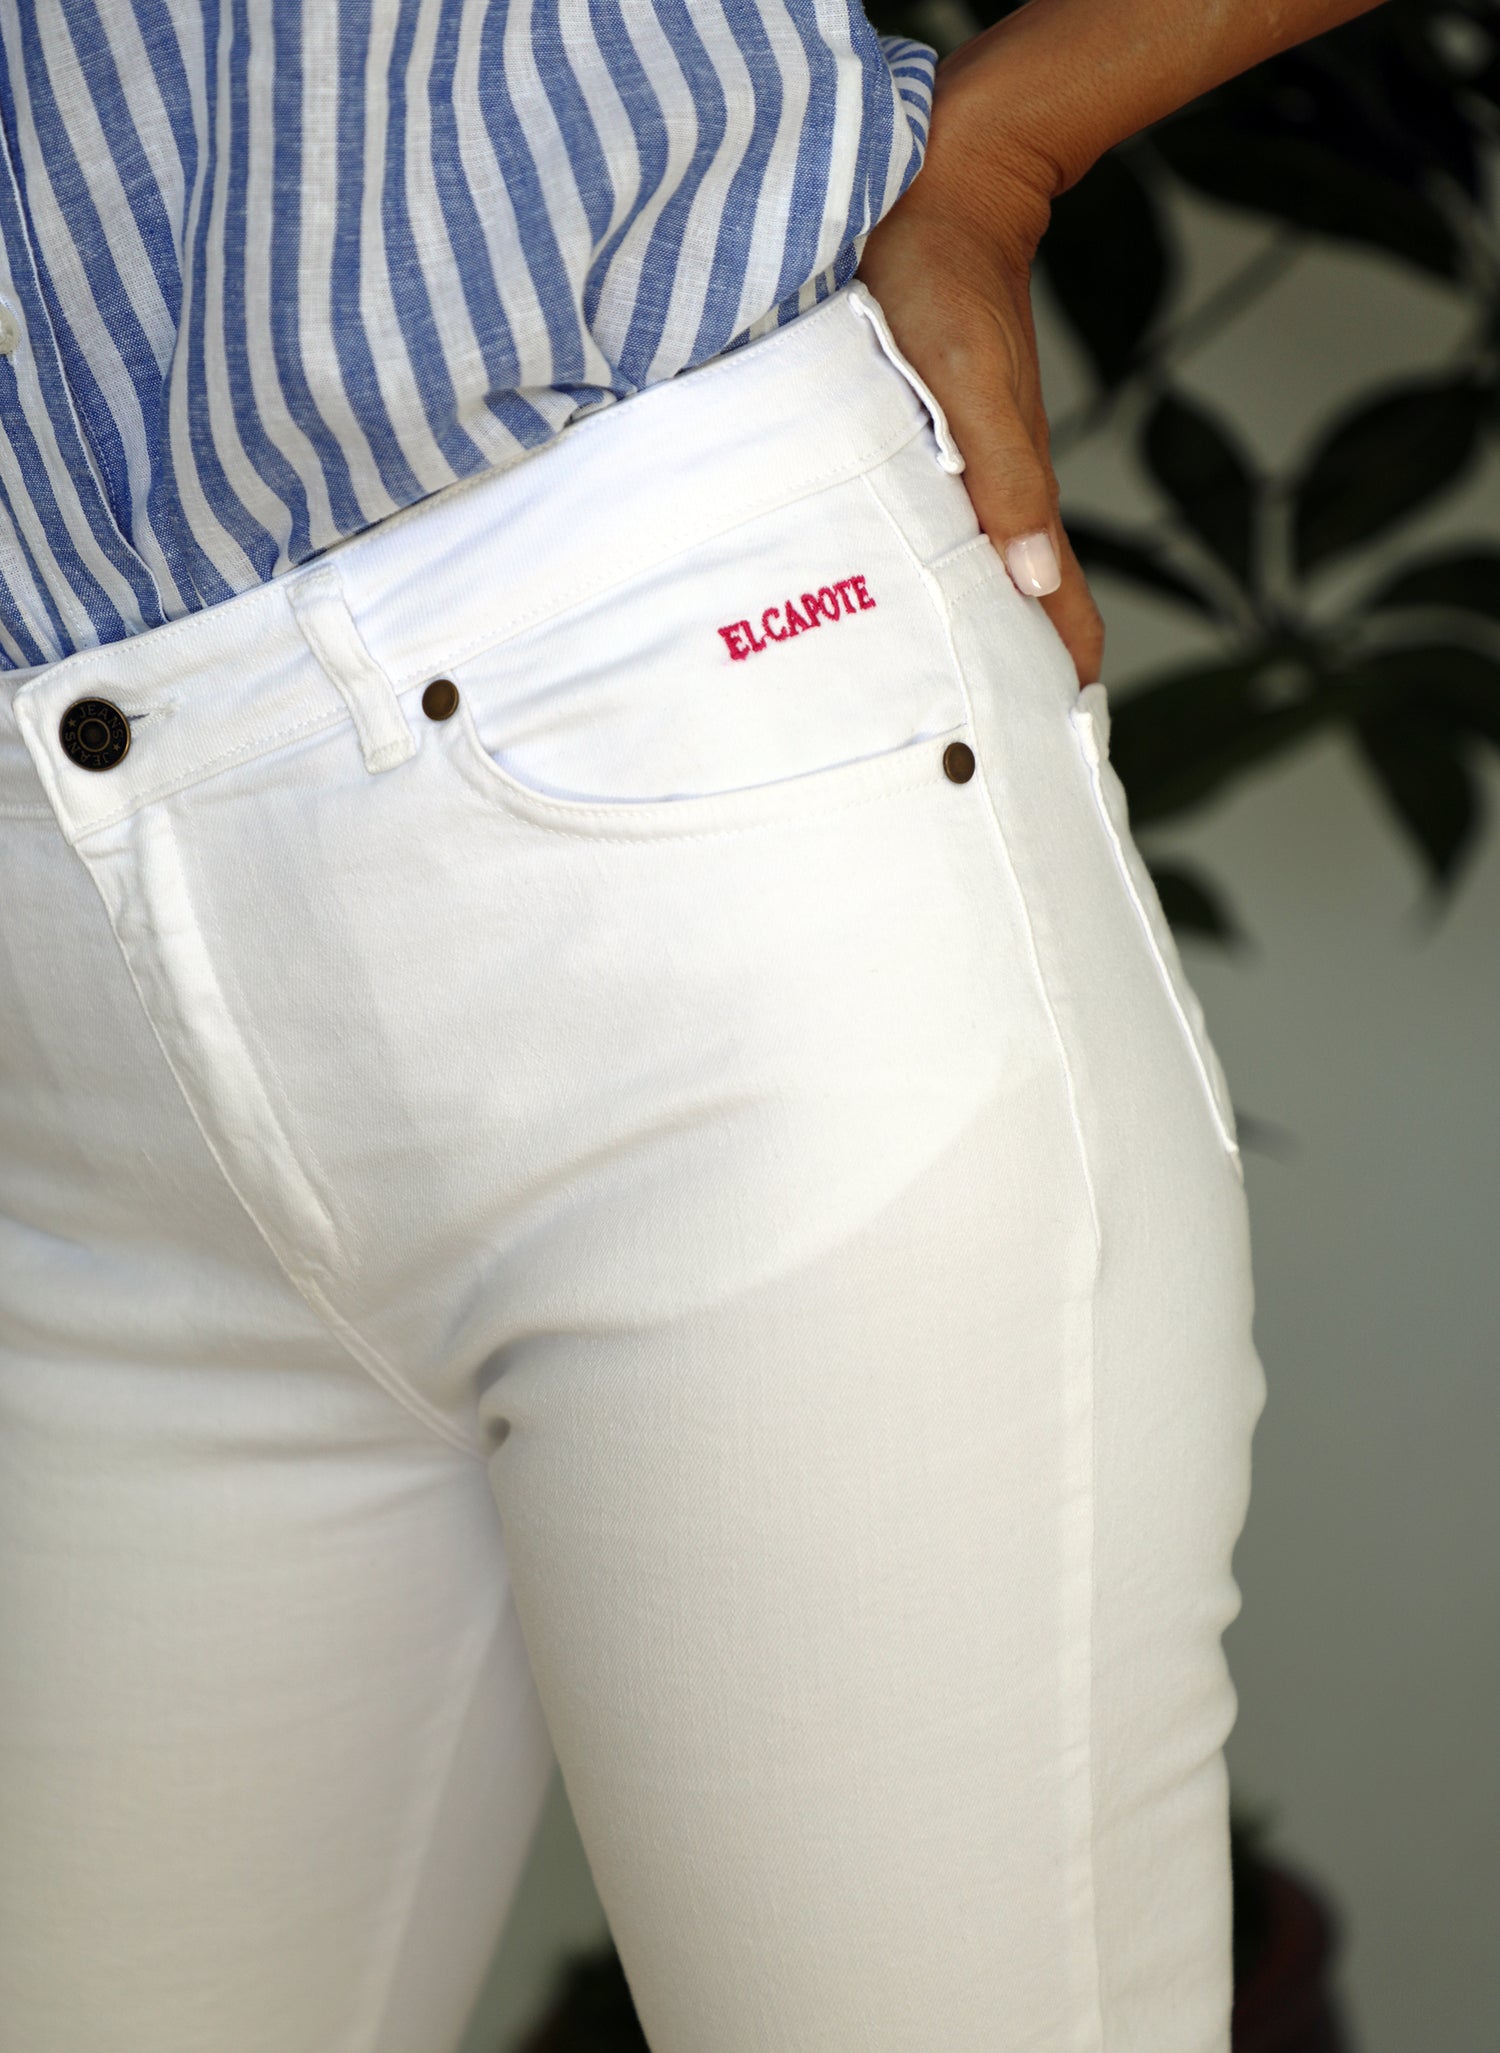 Pantalon femme blanc Capote rose avec 5 poches